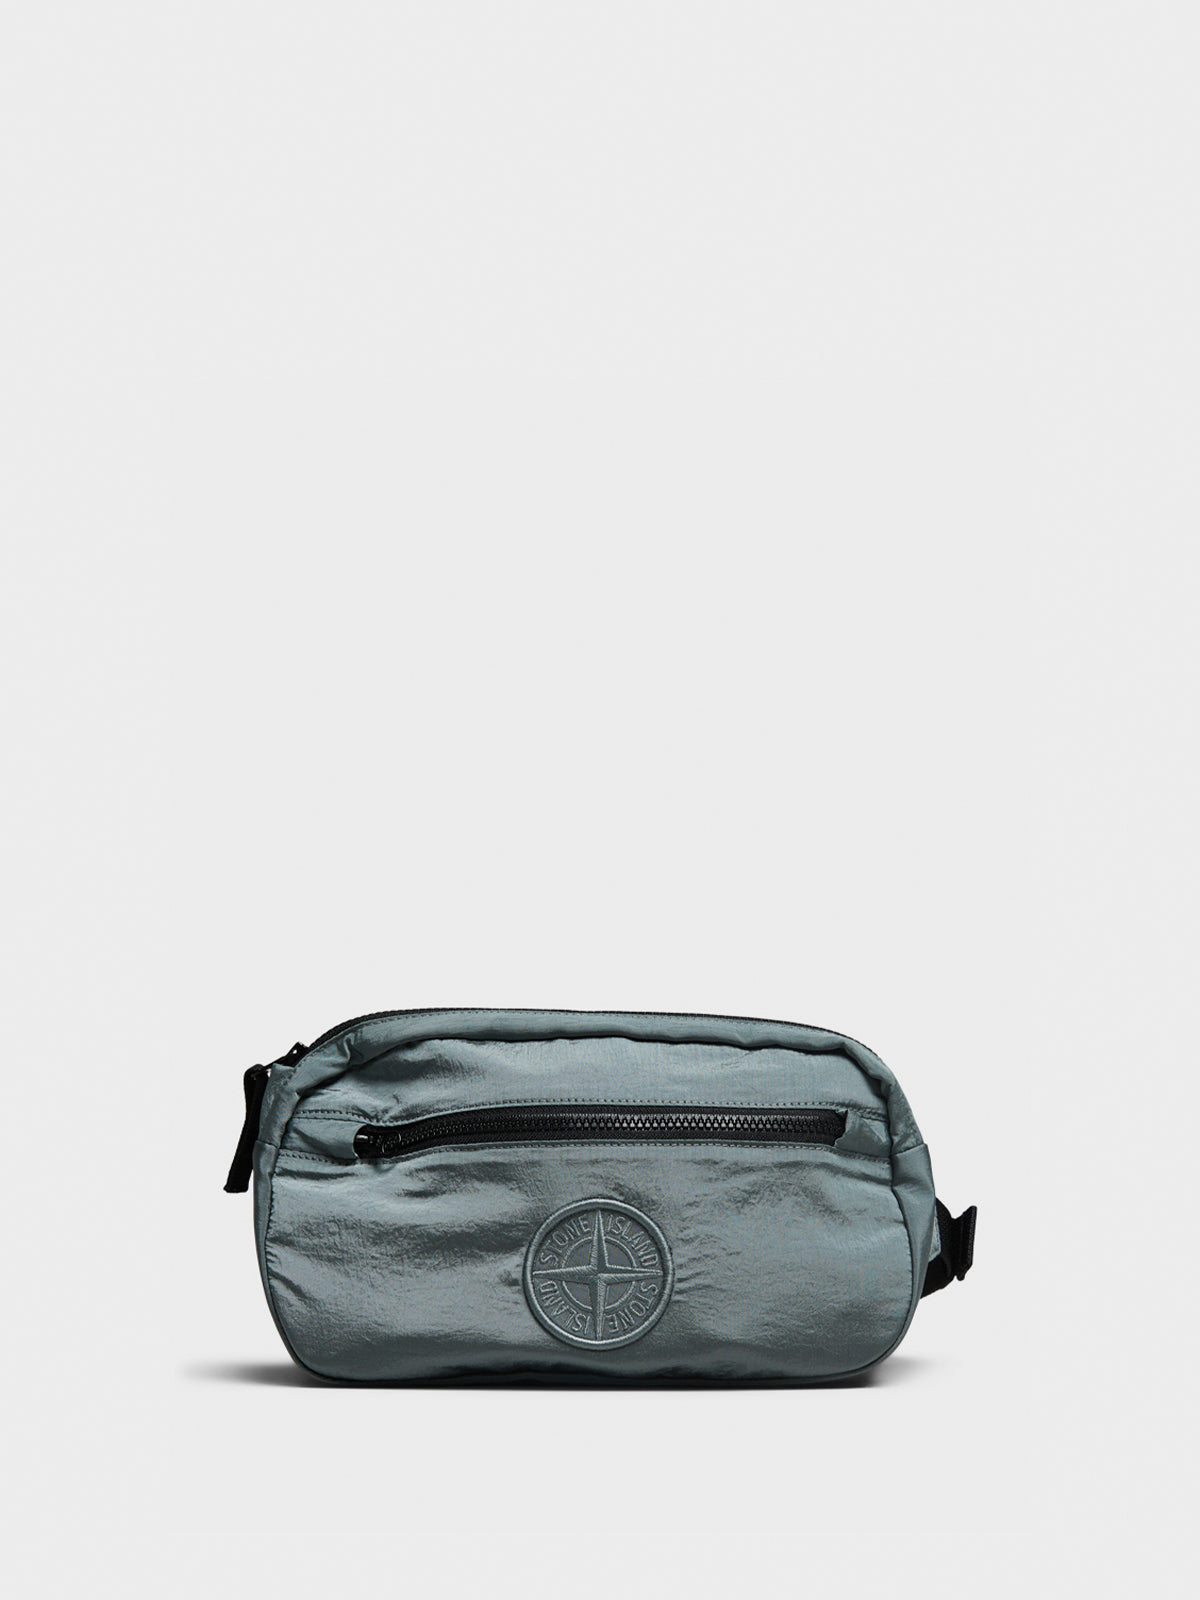 91576 Marsupio Bag in Grey Green